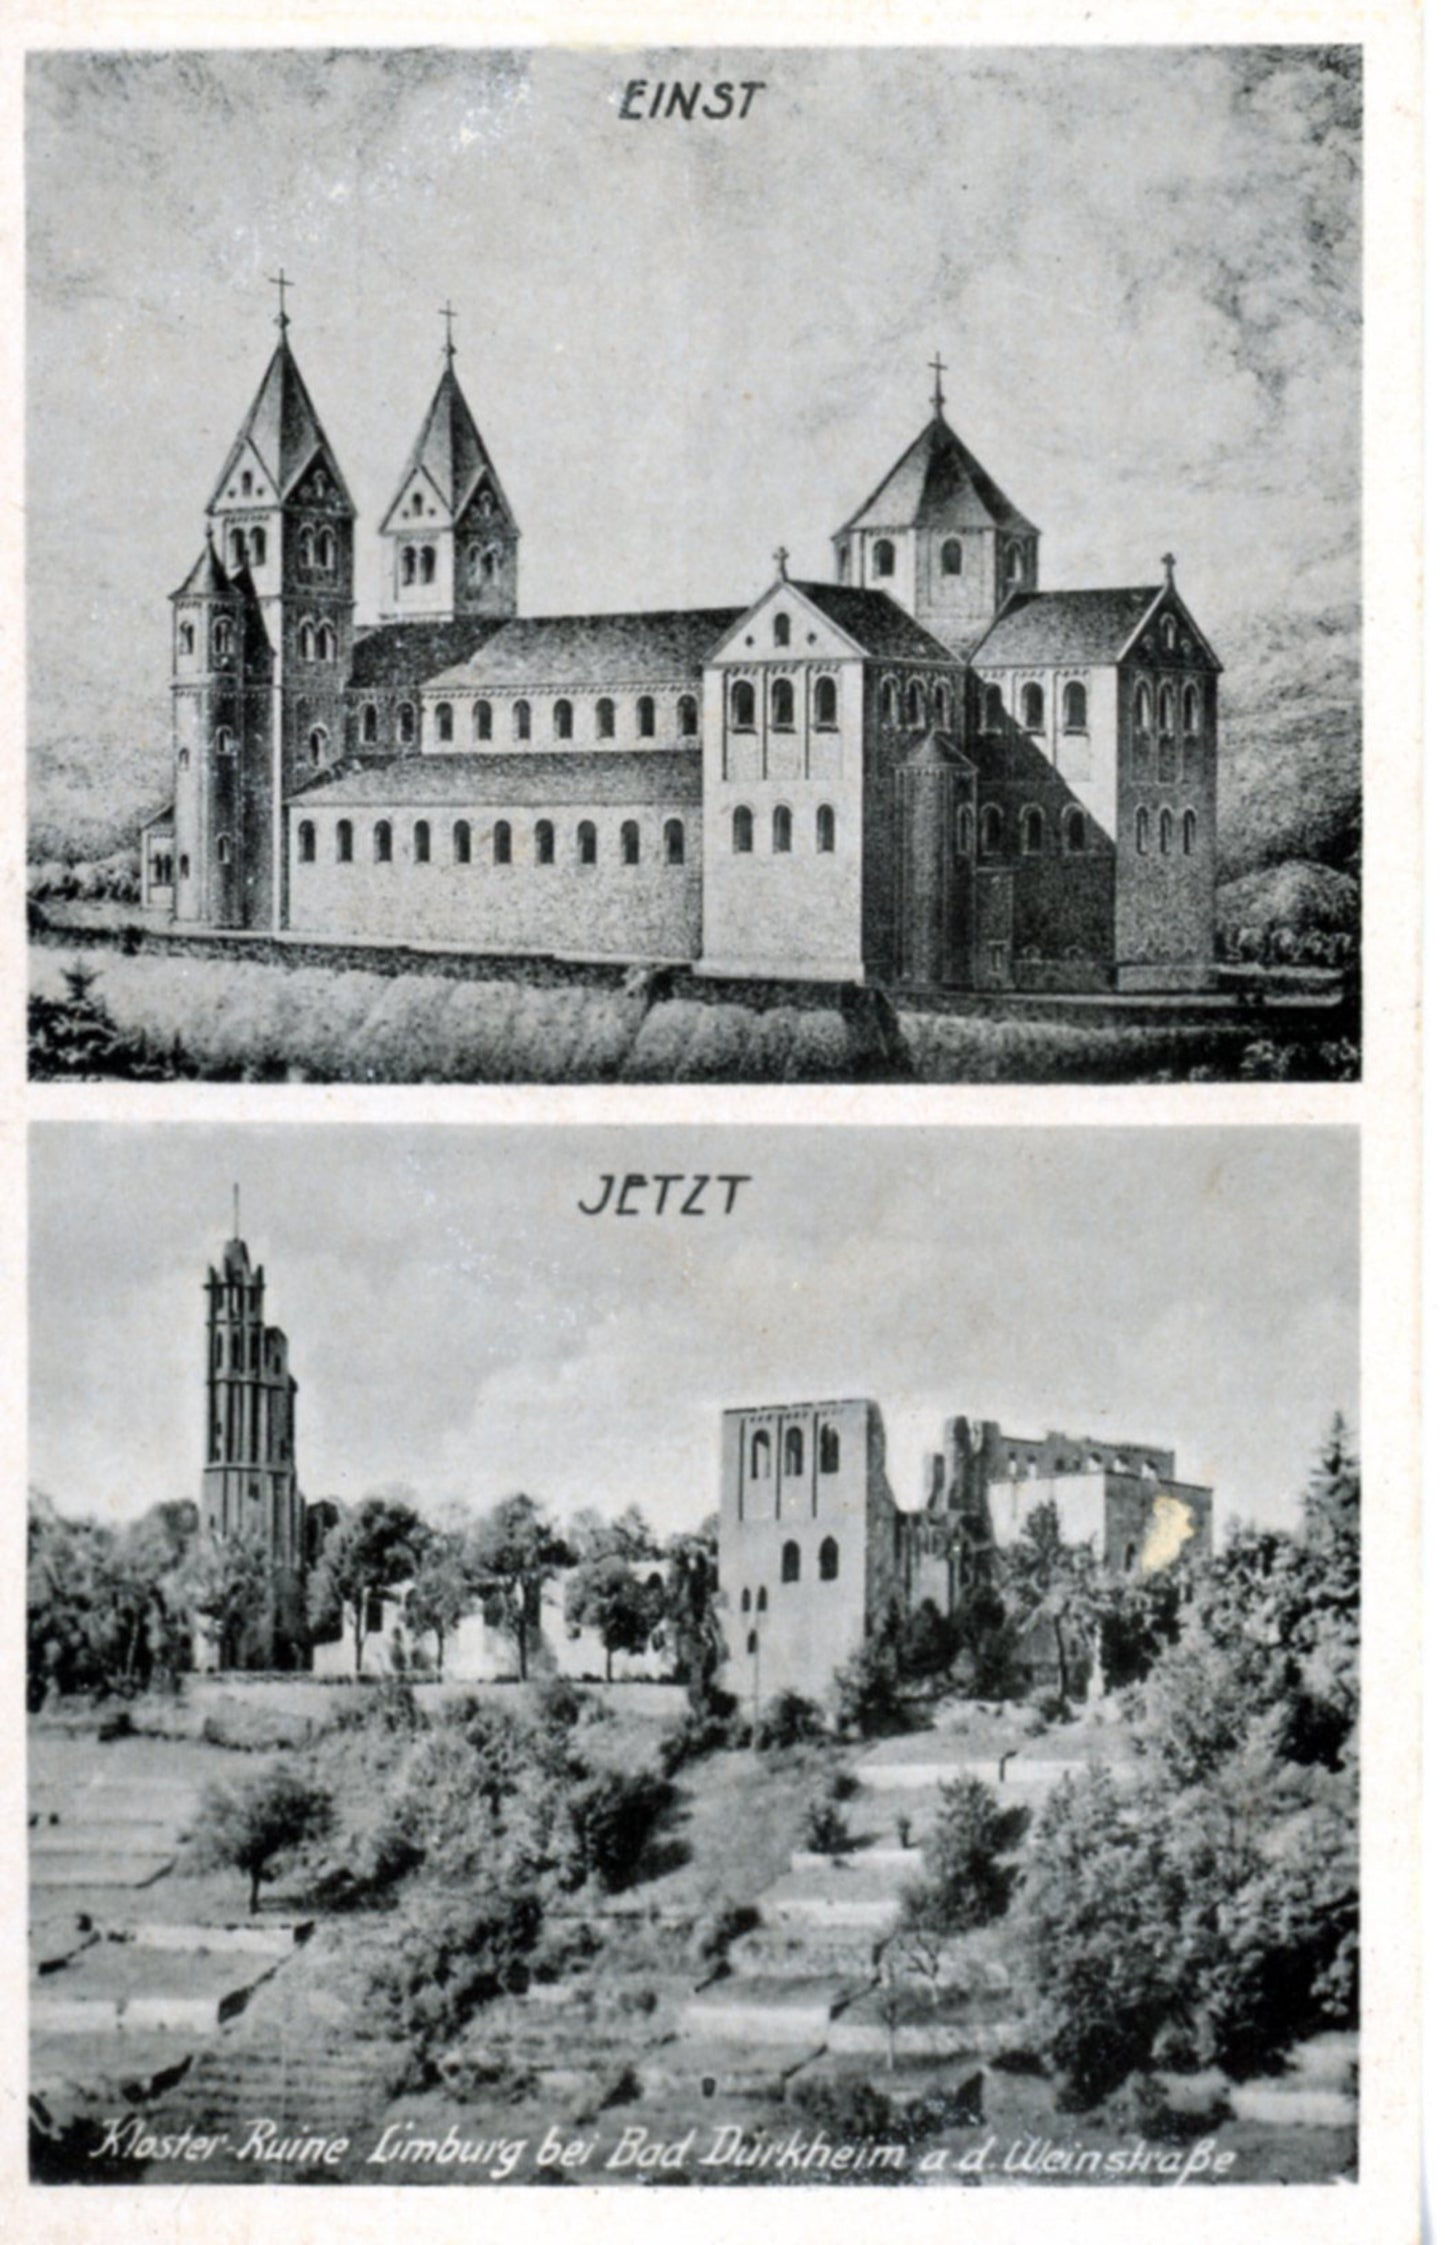 Kloster Ruine Limberg bei BAD DÜRKHEIM GERMANY Before After Real Photo Postcard